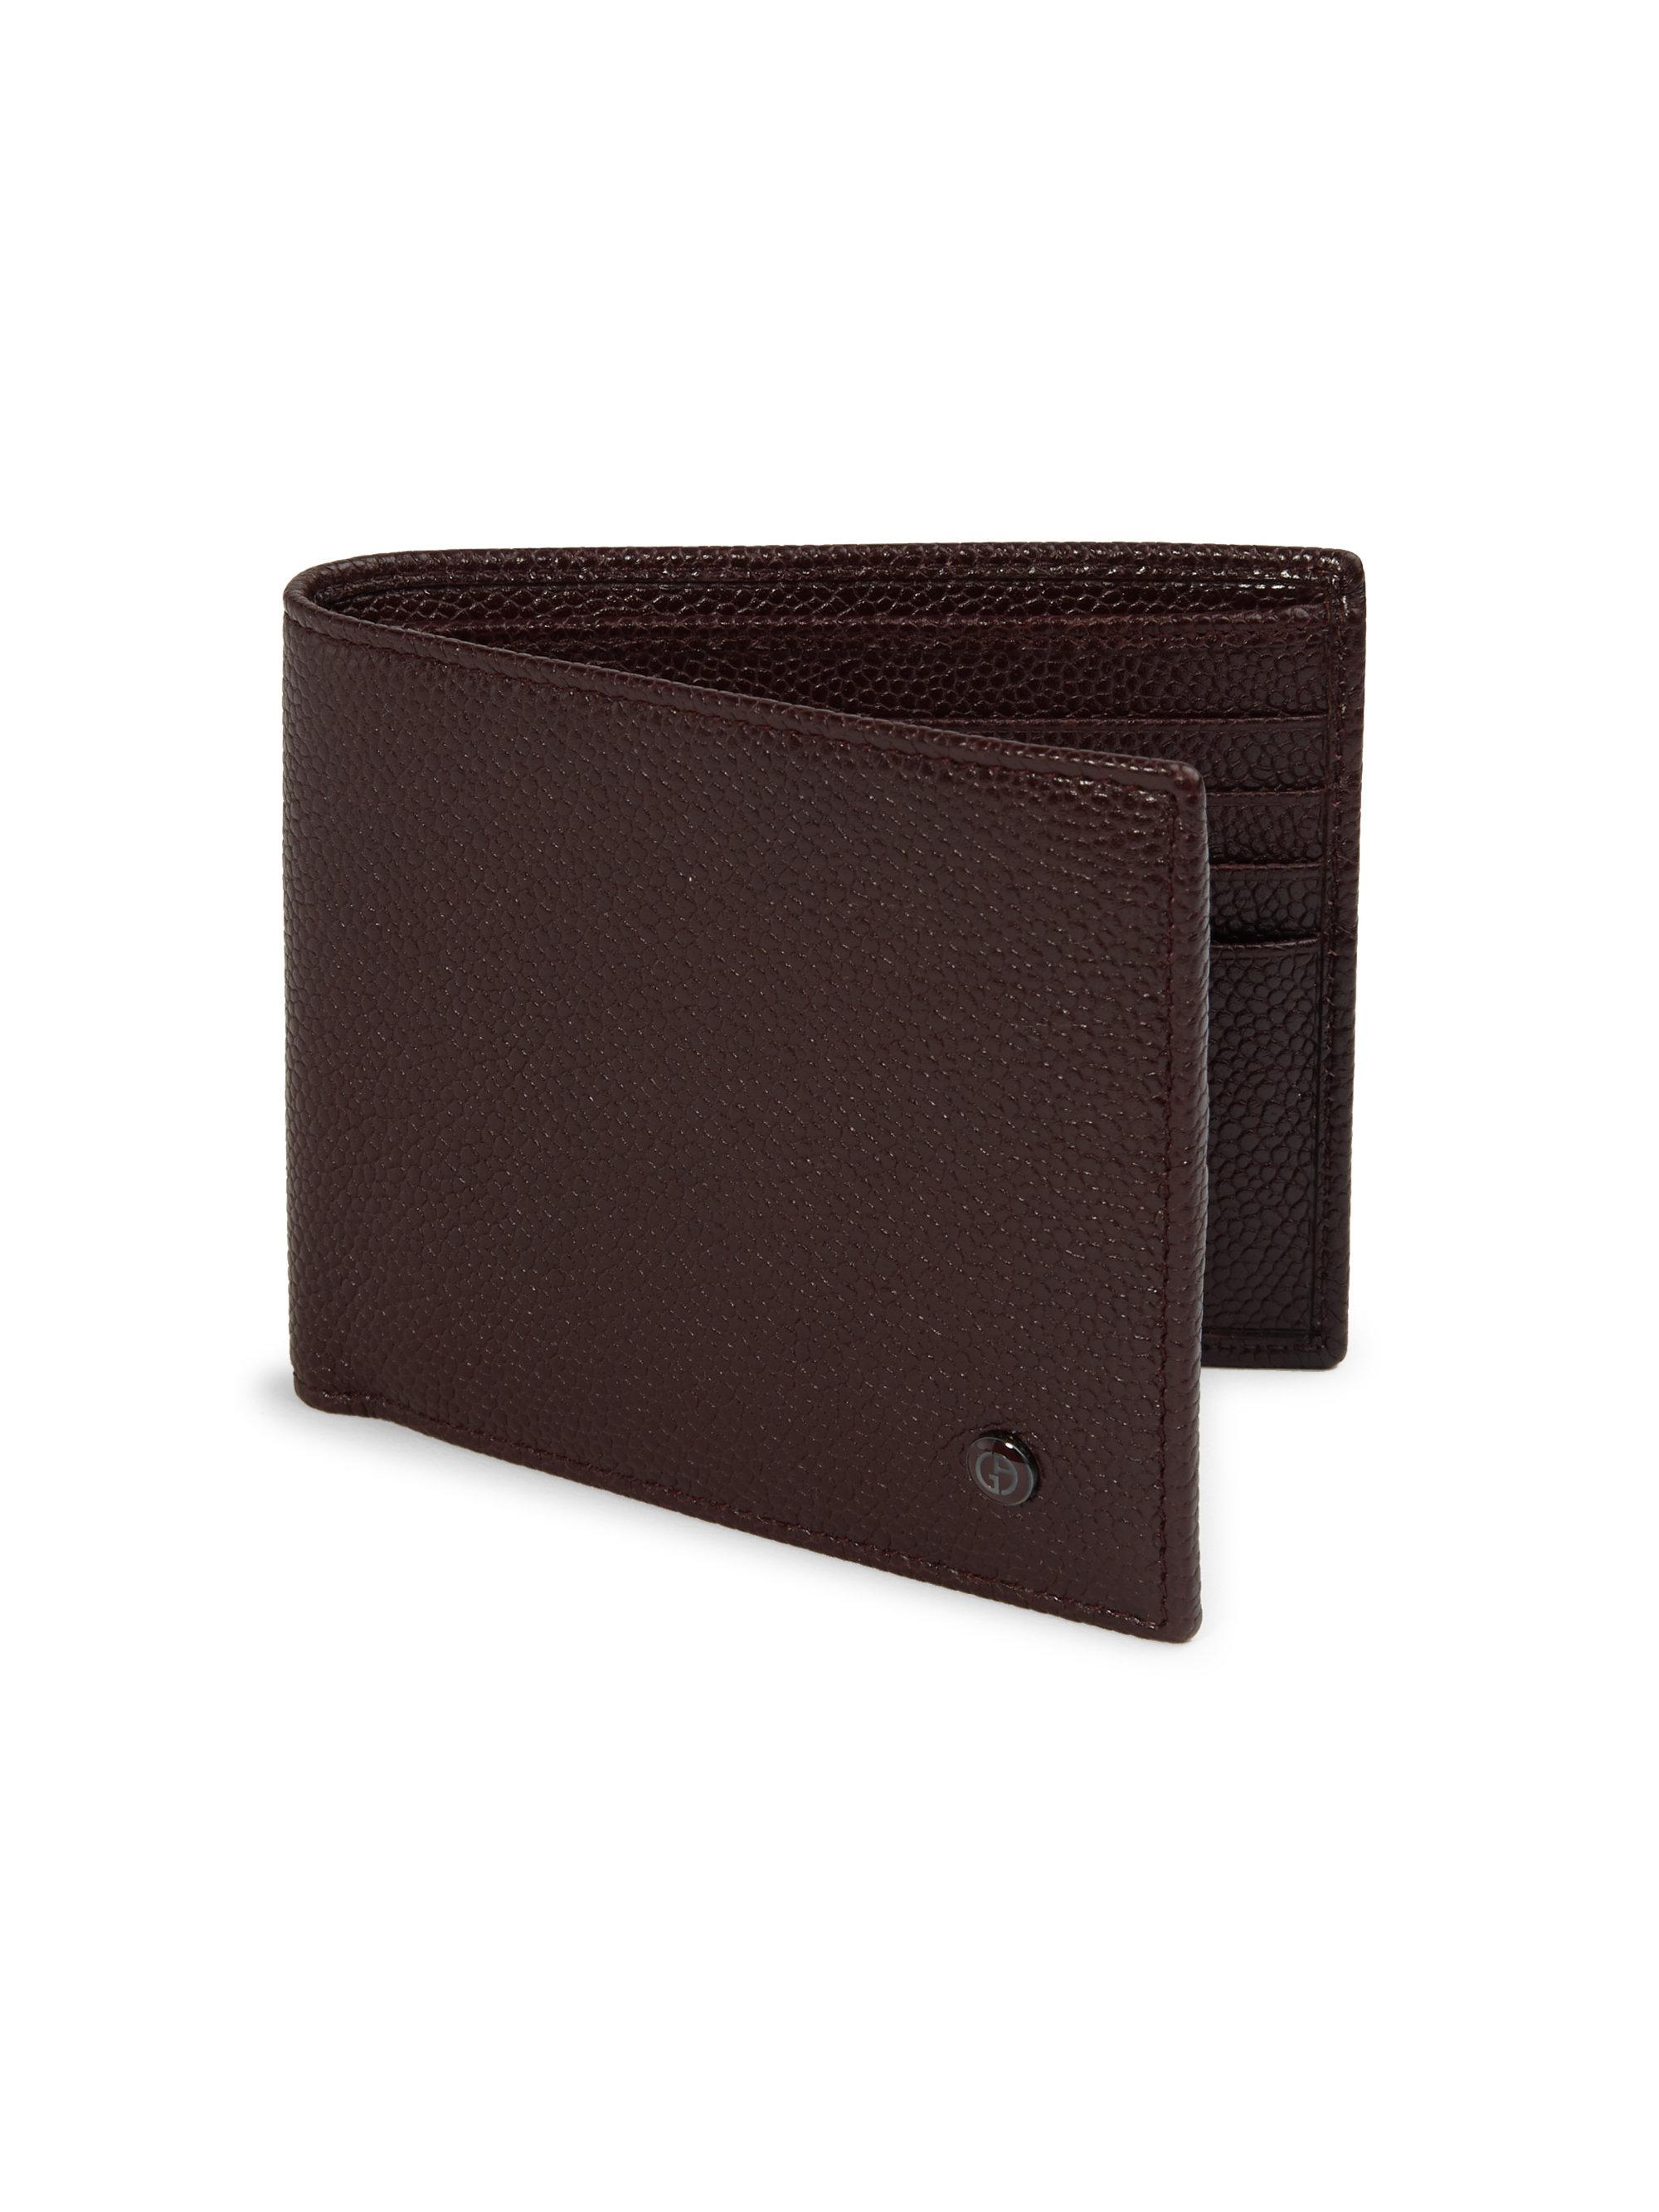 Giorgio Armani Leather Bi-fold Wallet in Brown for Men - Lyst